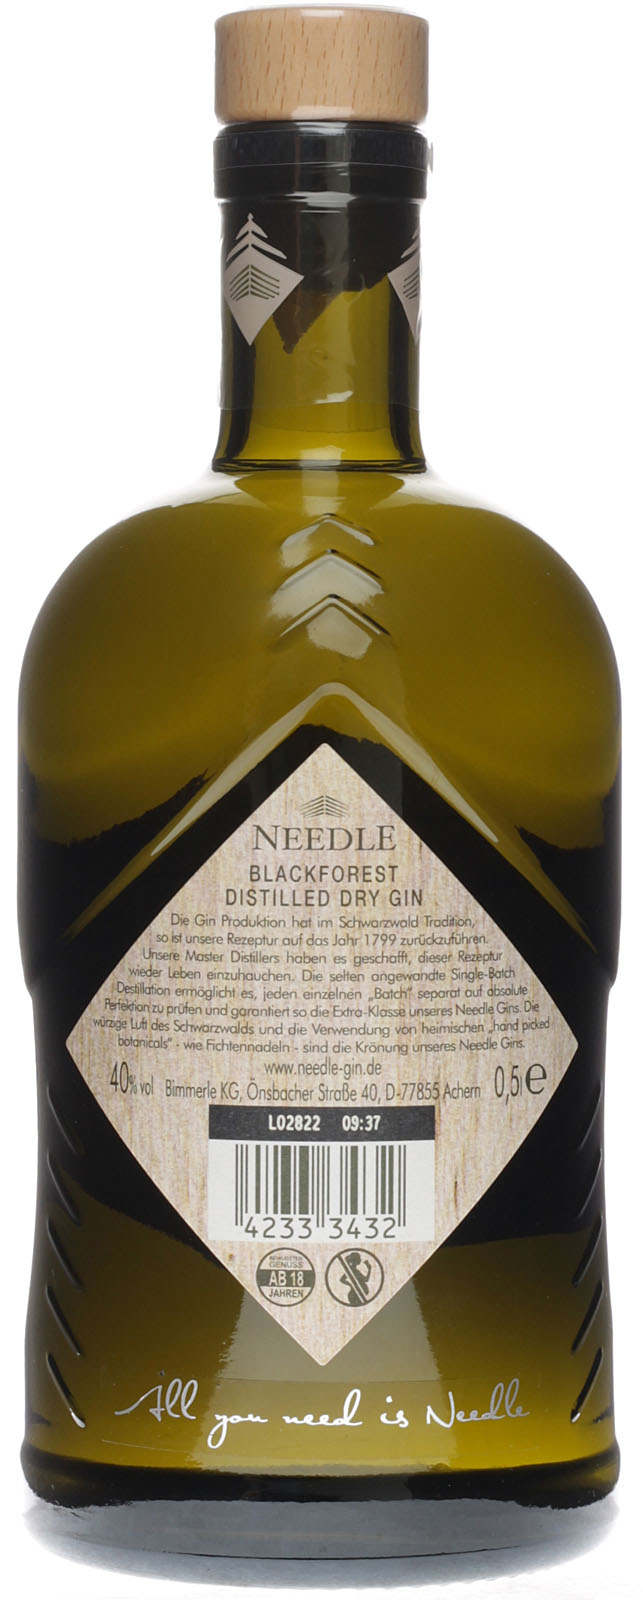 Needle Blackforst 40 0,5 Dry Gin Distilled Liter 